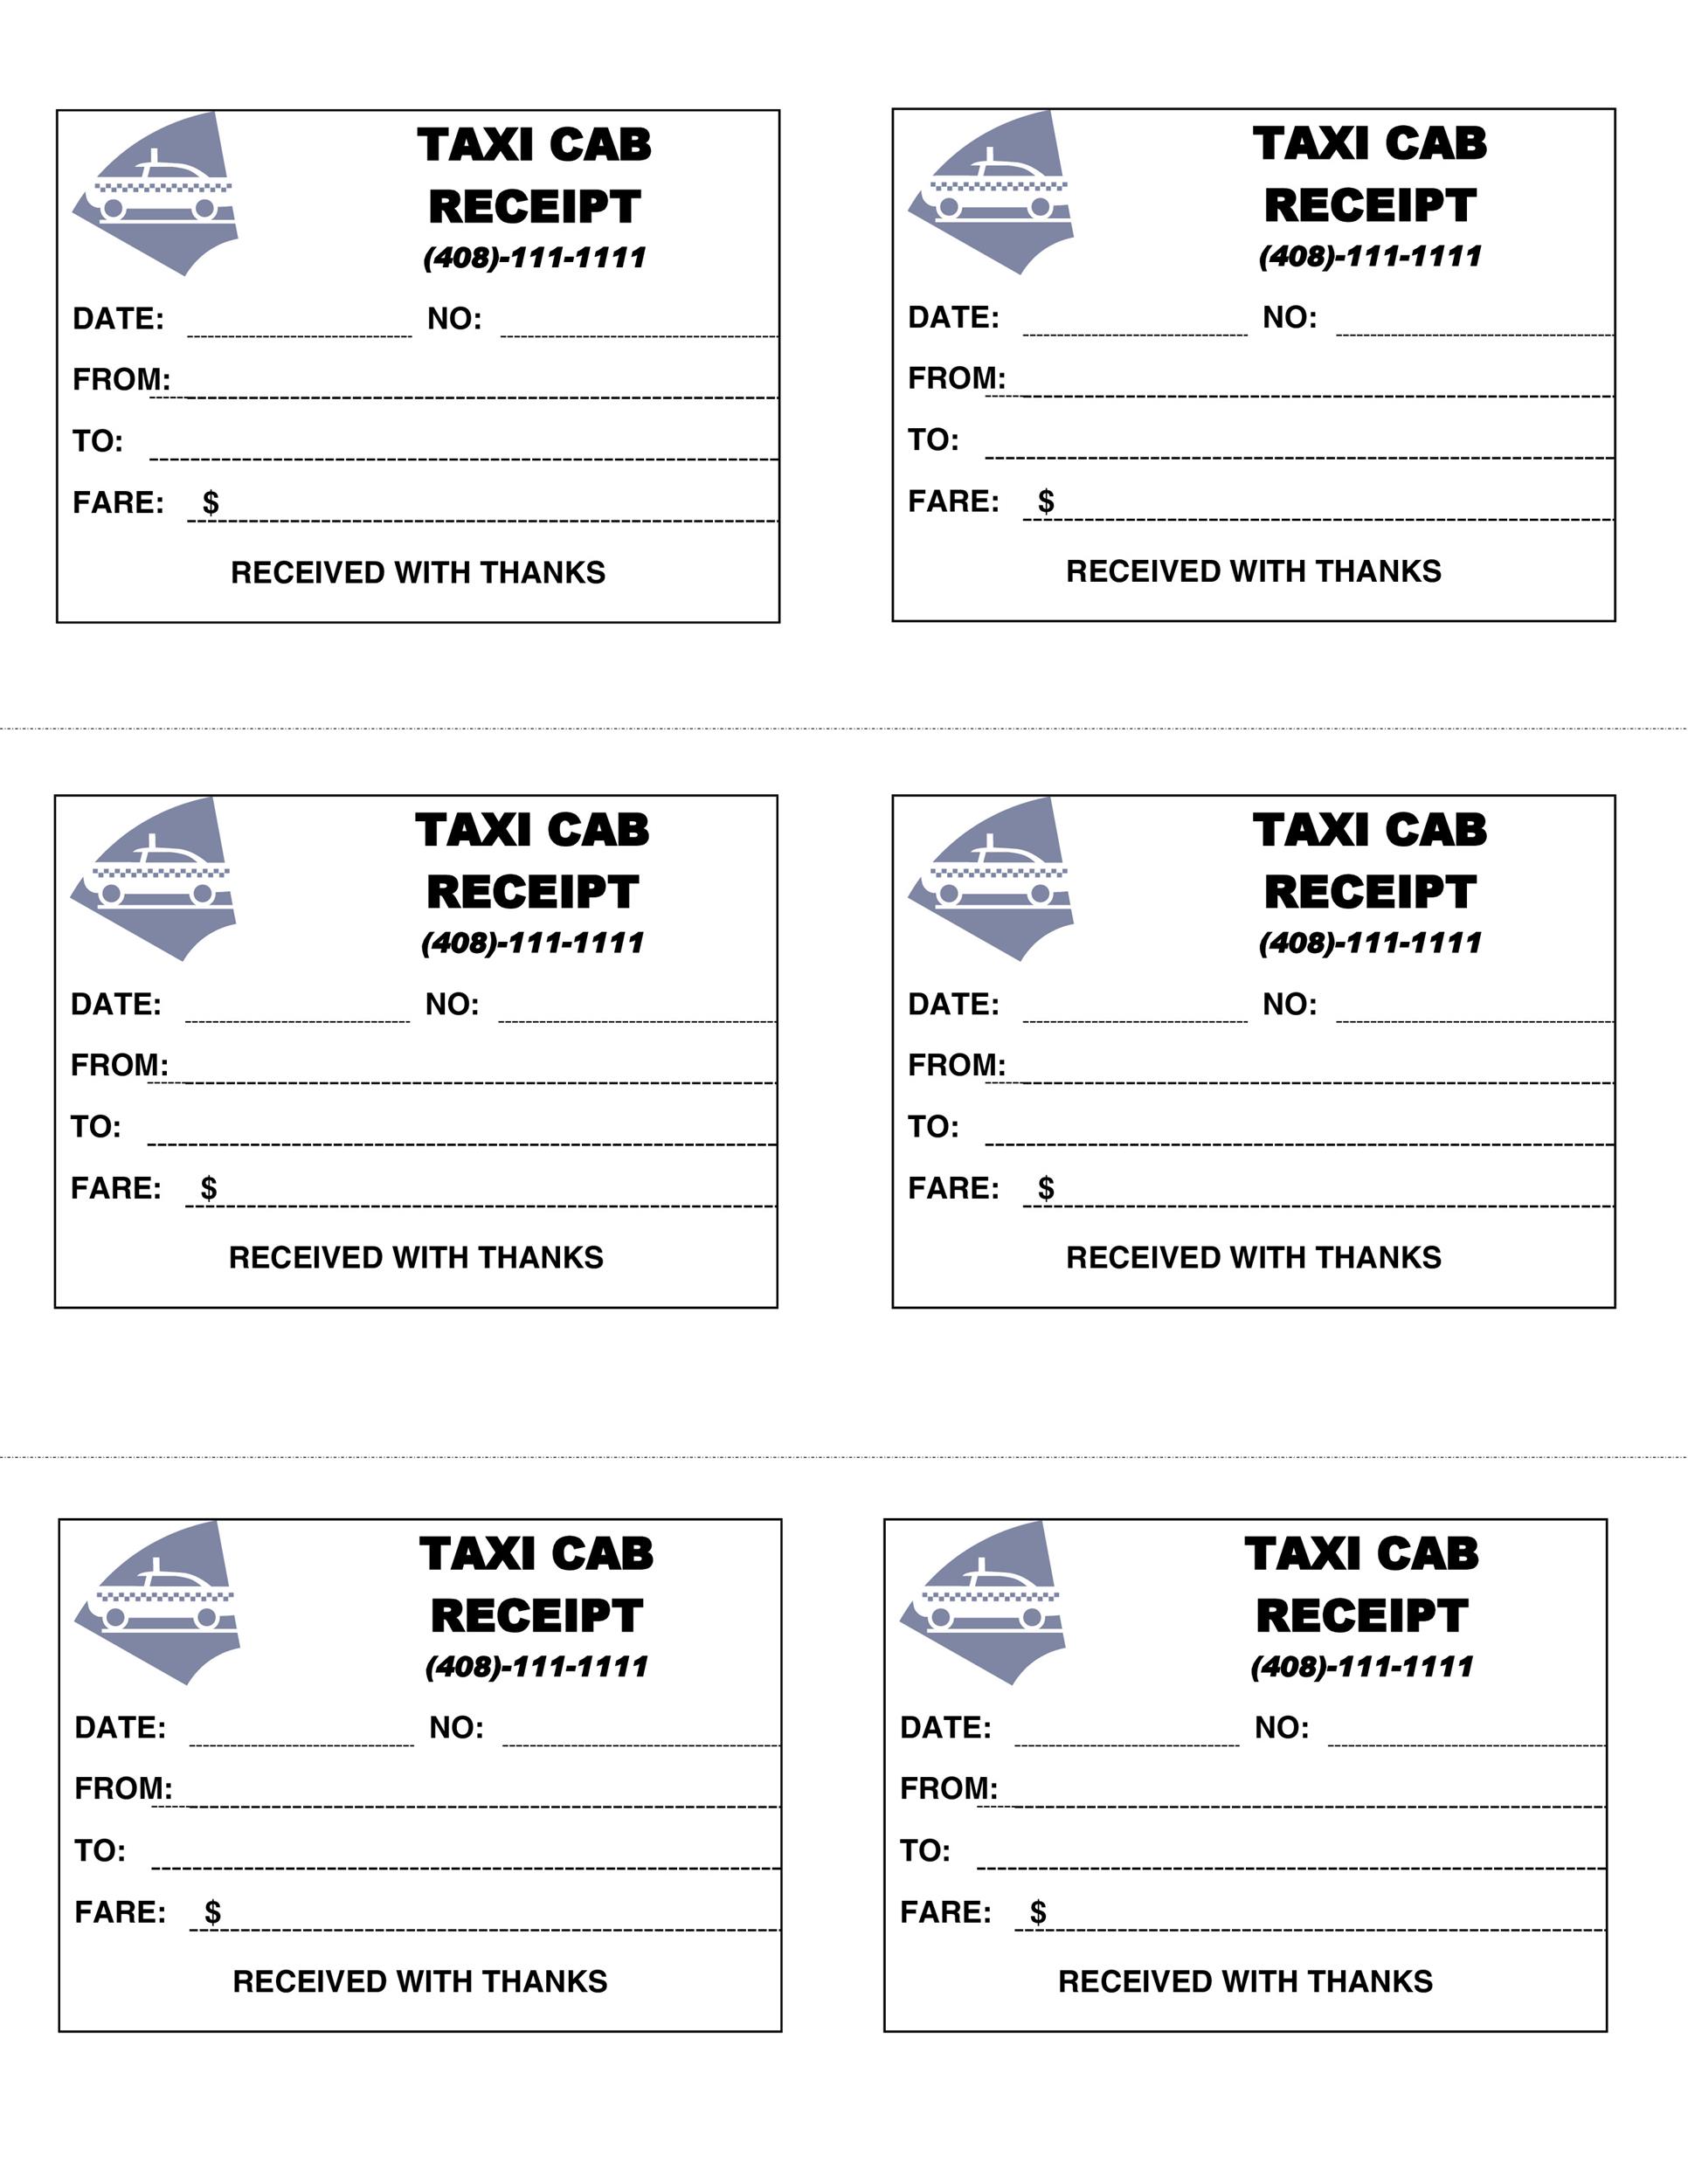 50  Free Receipt Templates (Cash Sales Donation Taxi )